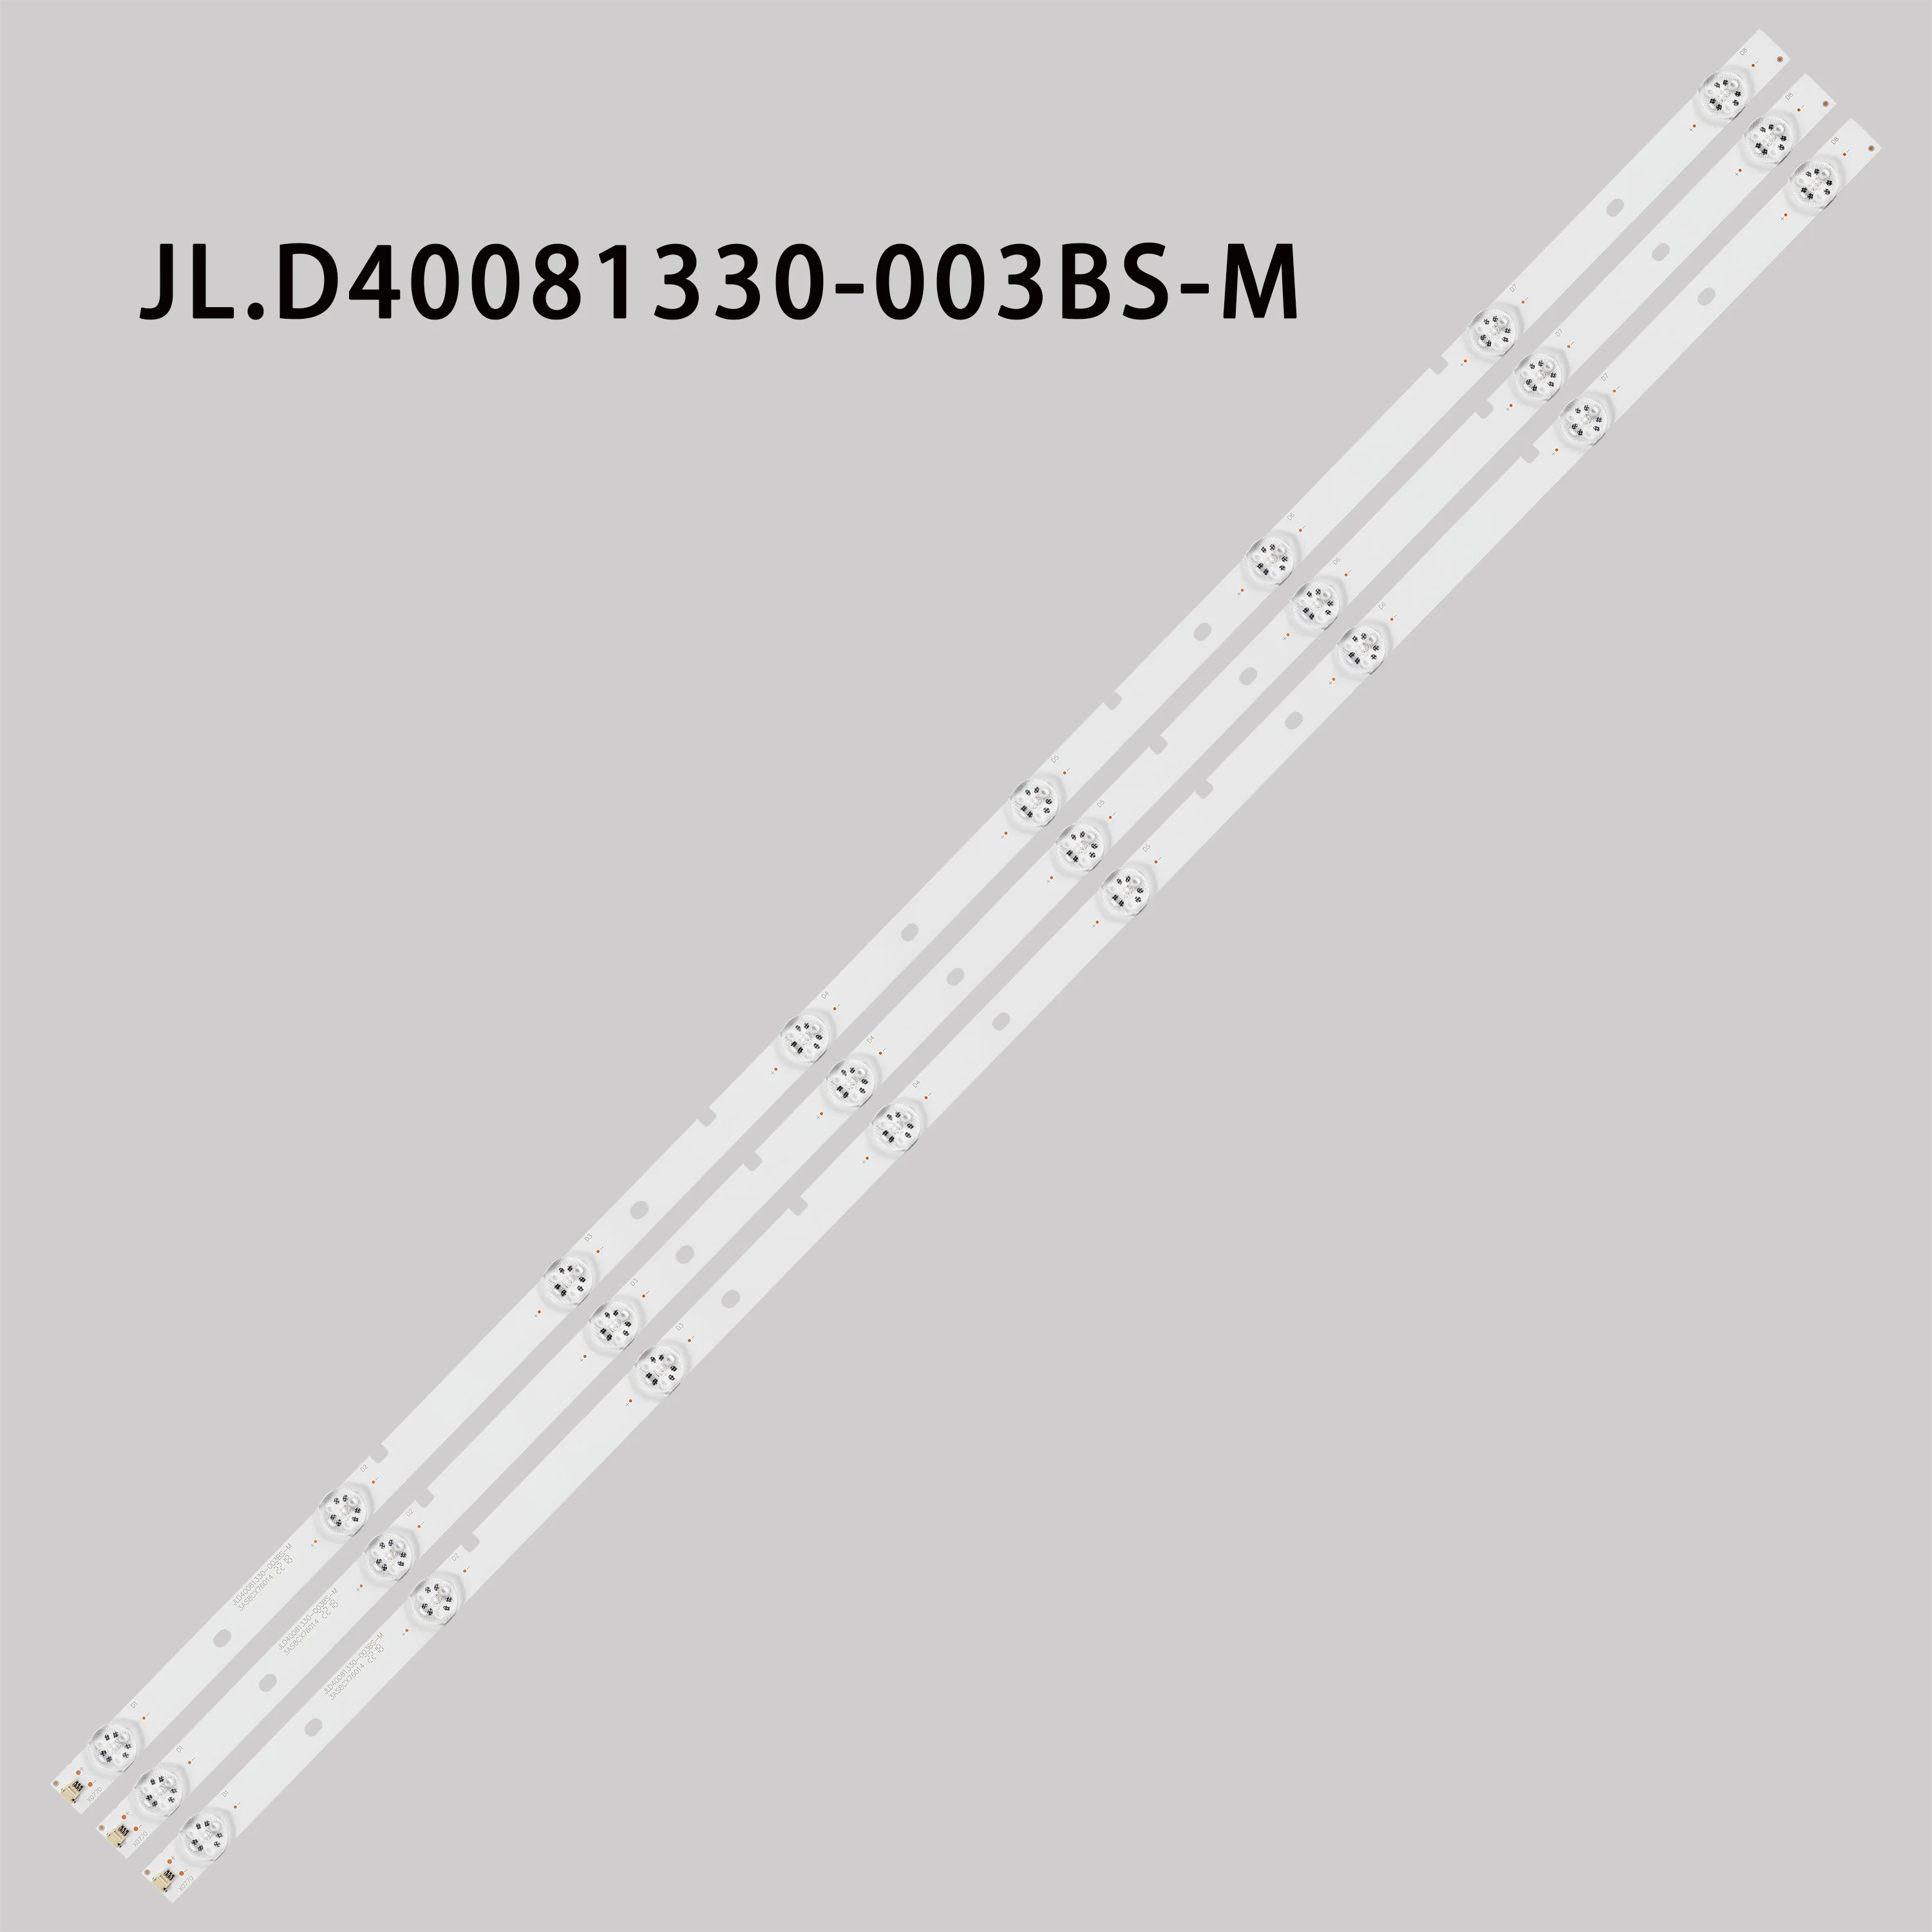 LED strip JL.D40081330-003BS-M for Hisense 40'' TV H40M2100C